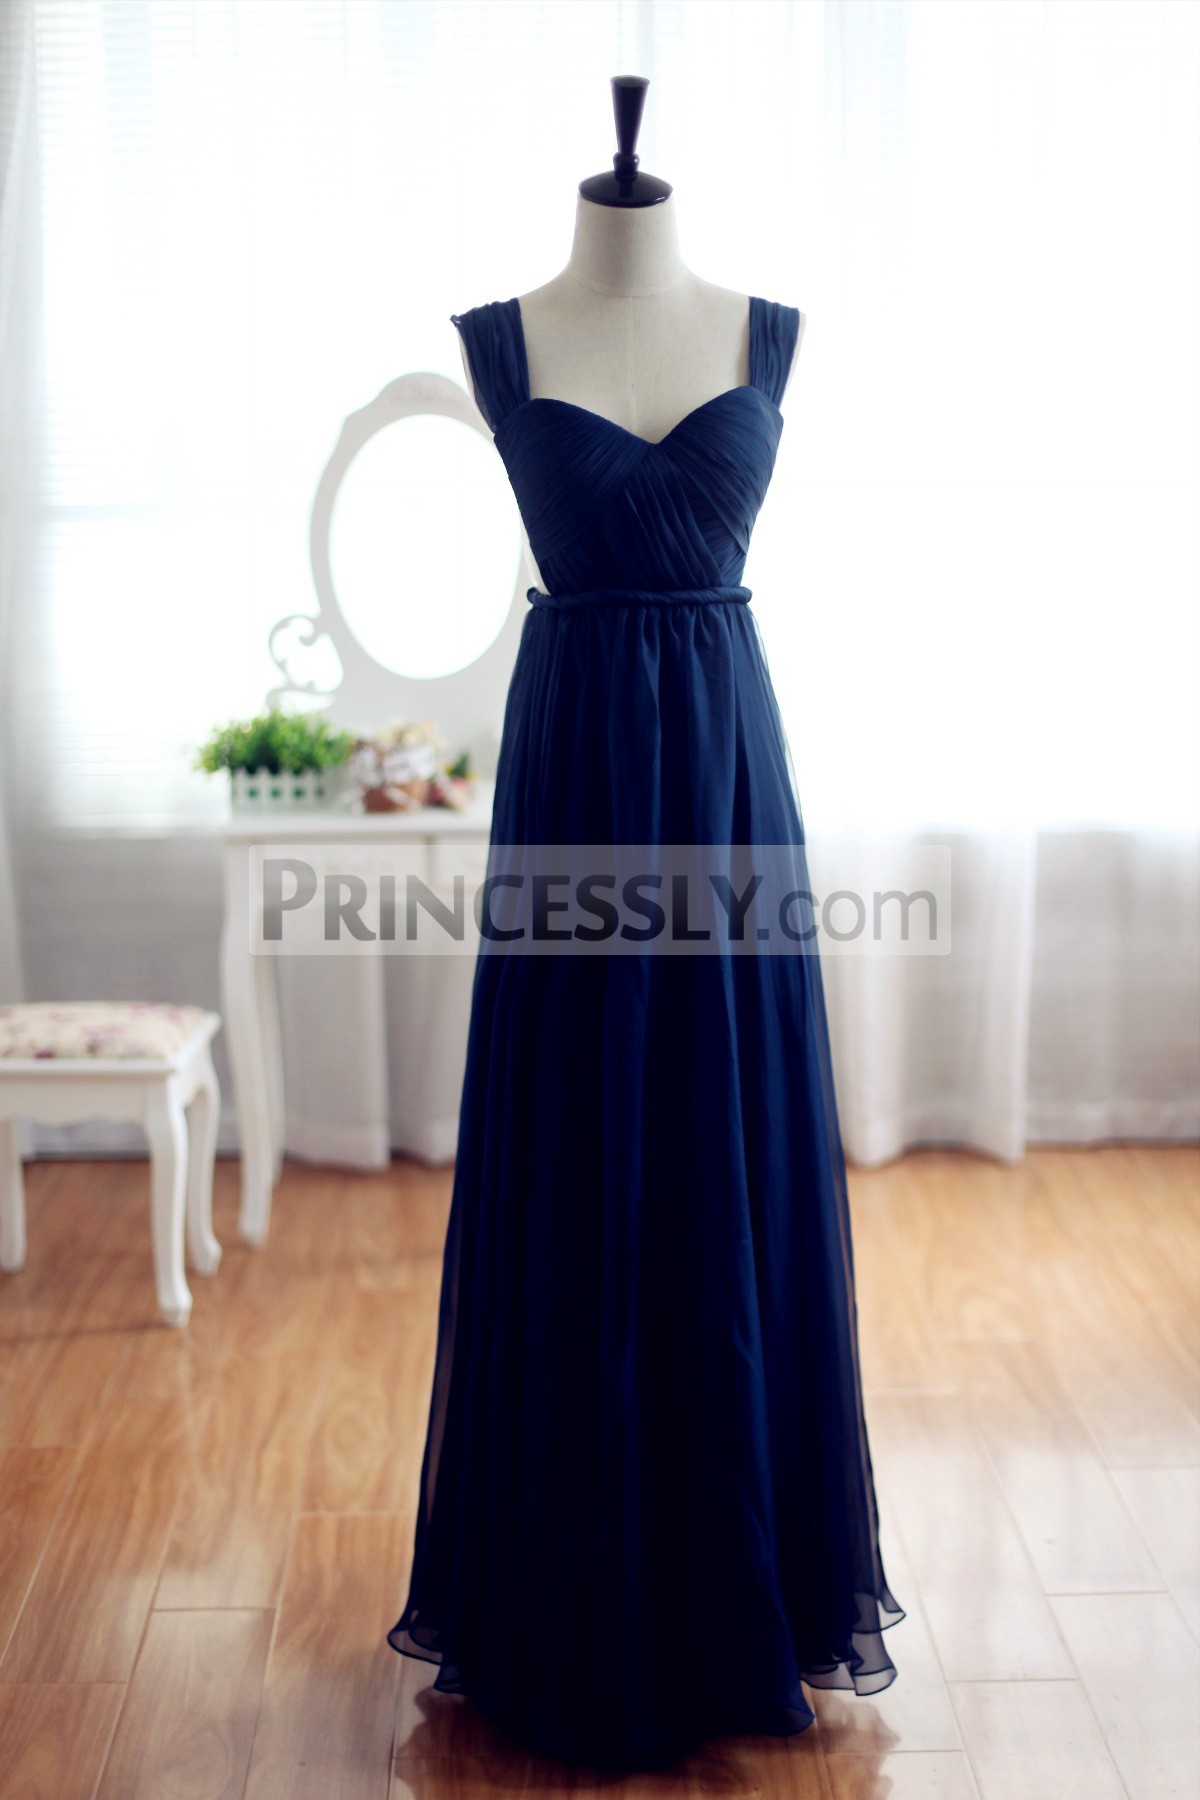 Princessly.com-K1001943-Navy Blue Chiffon Bridesmaid Dress Prom Dress Backless Party Dress-31